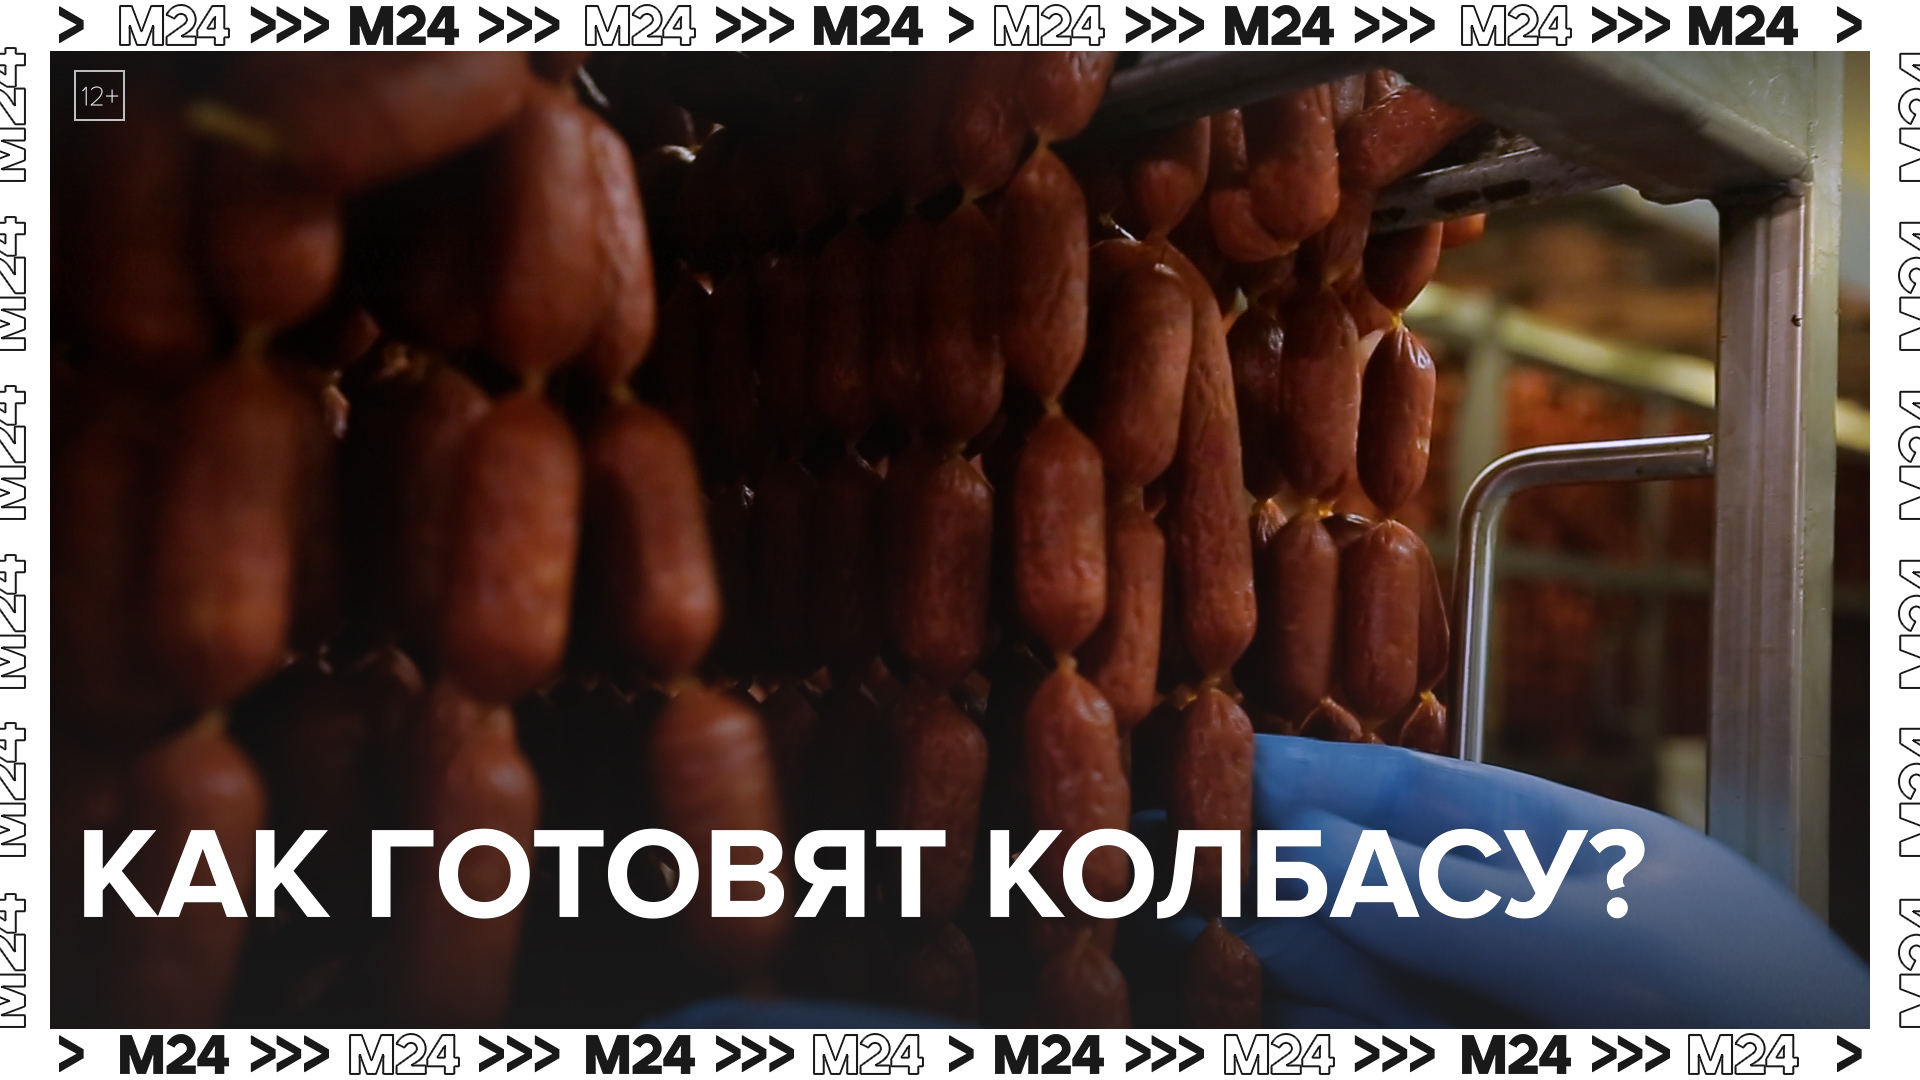 Как готовят колбасу? — Москва24|Контент